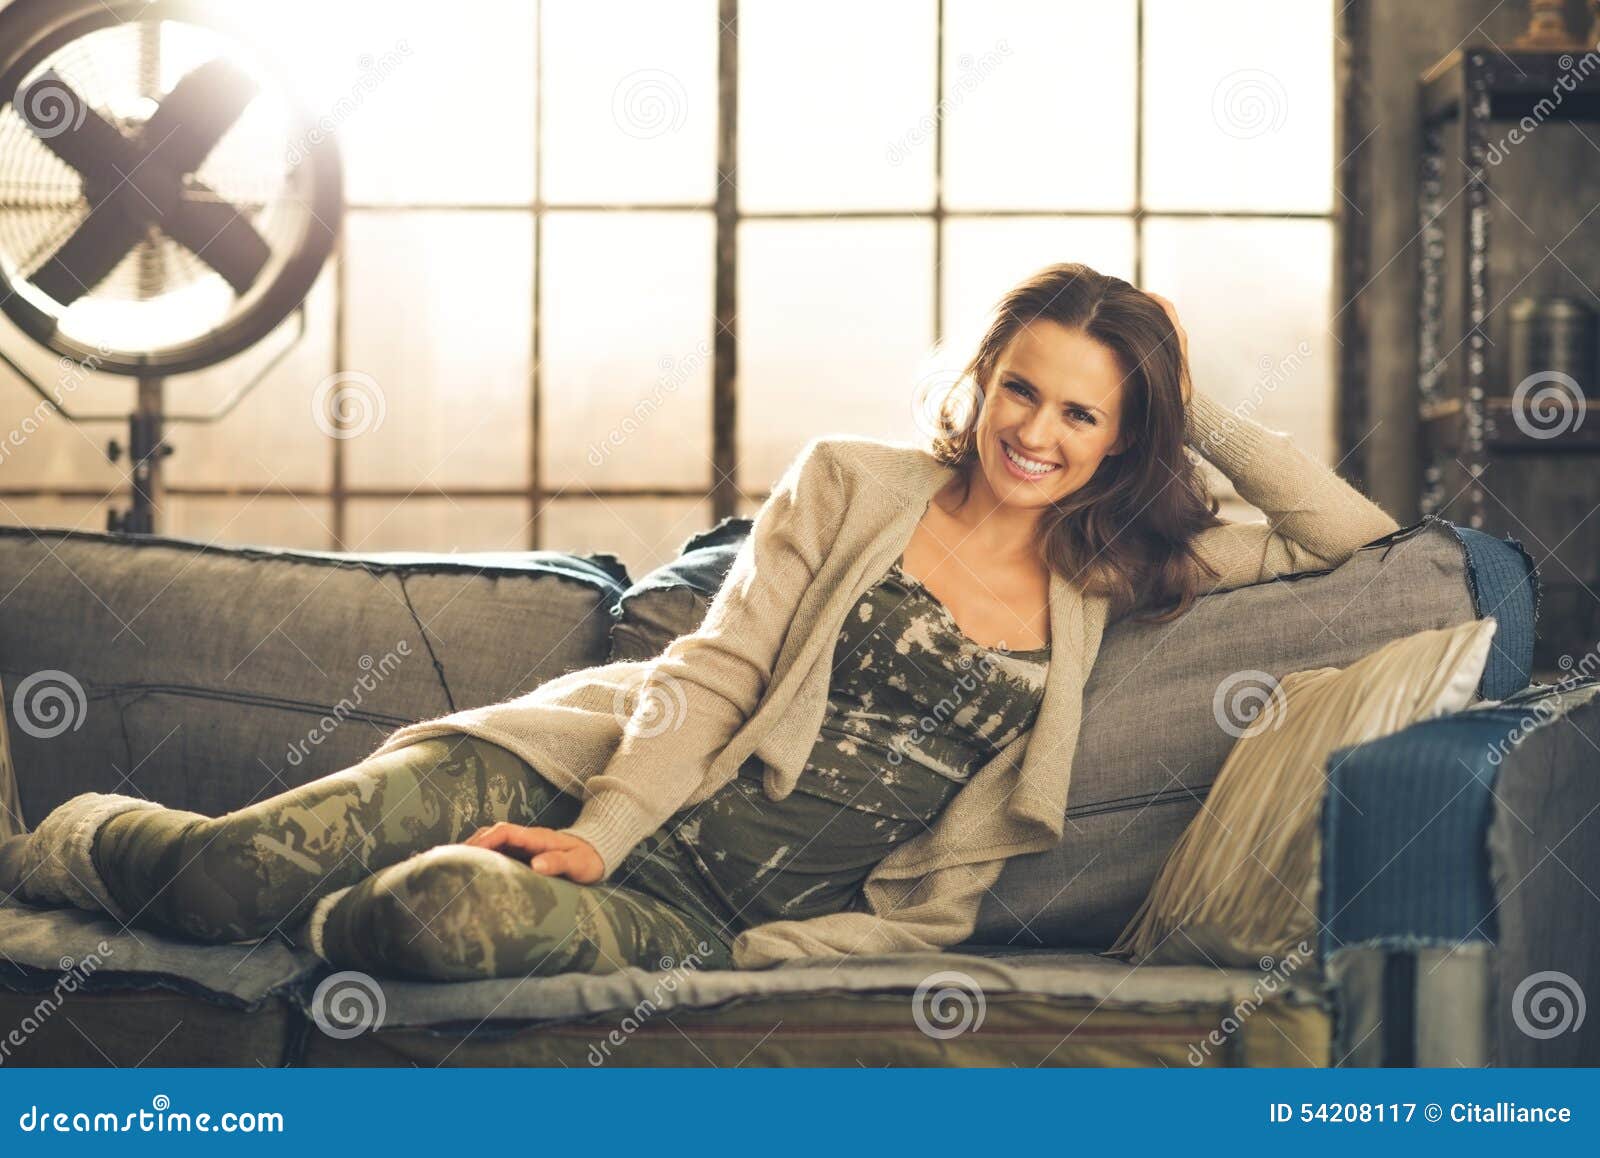 https://thumbs.dreamstime.com/z/brunette-woman-smiling-relaxing-sofa-feet-curled-under-her-wearing-comfortable-clothing-leggings-cardigan-54208117.jpg